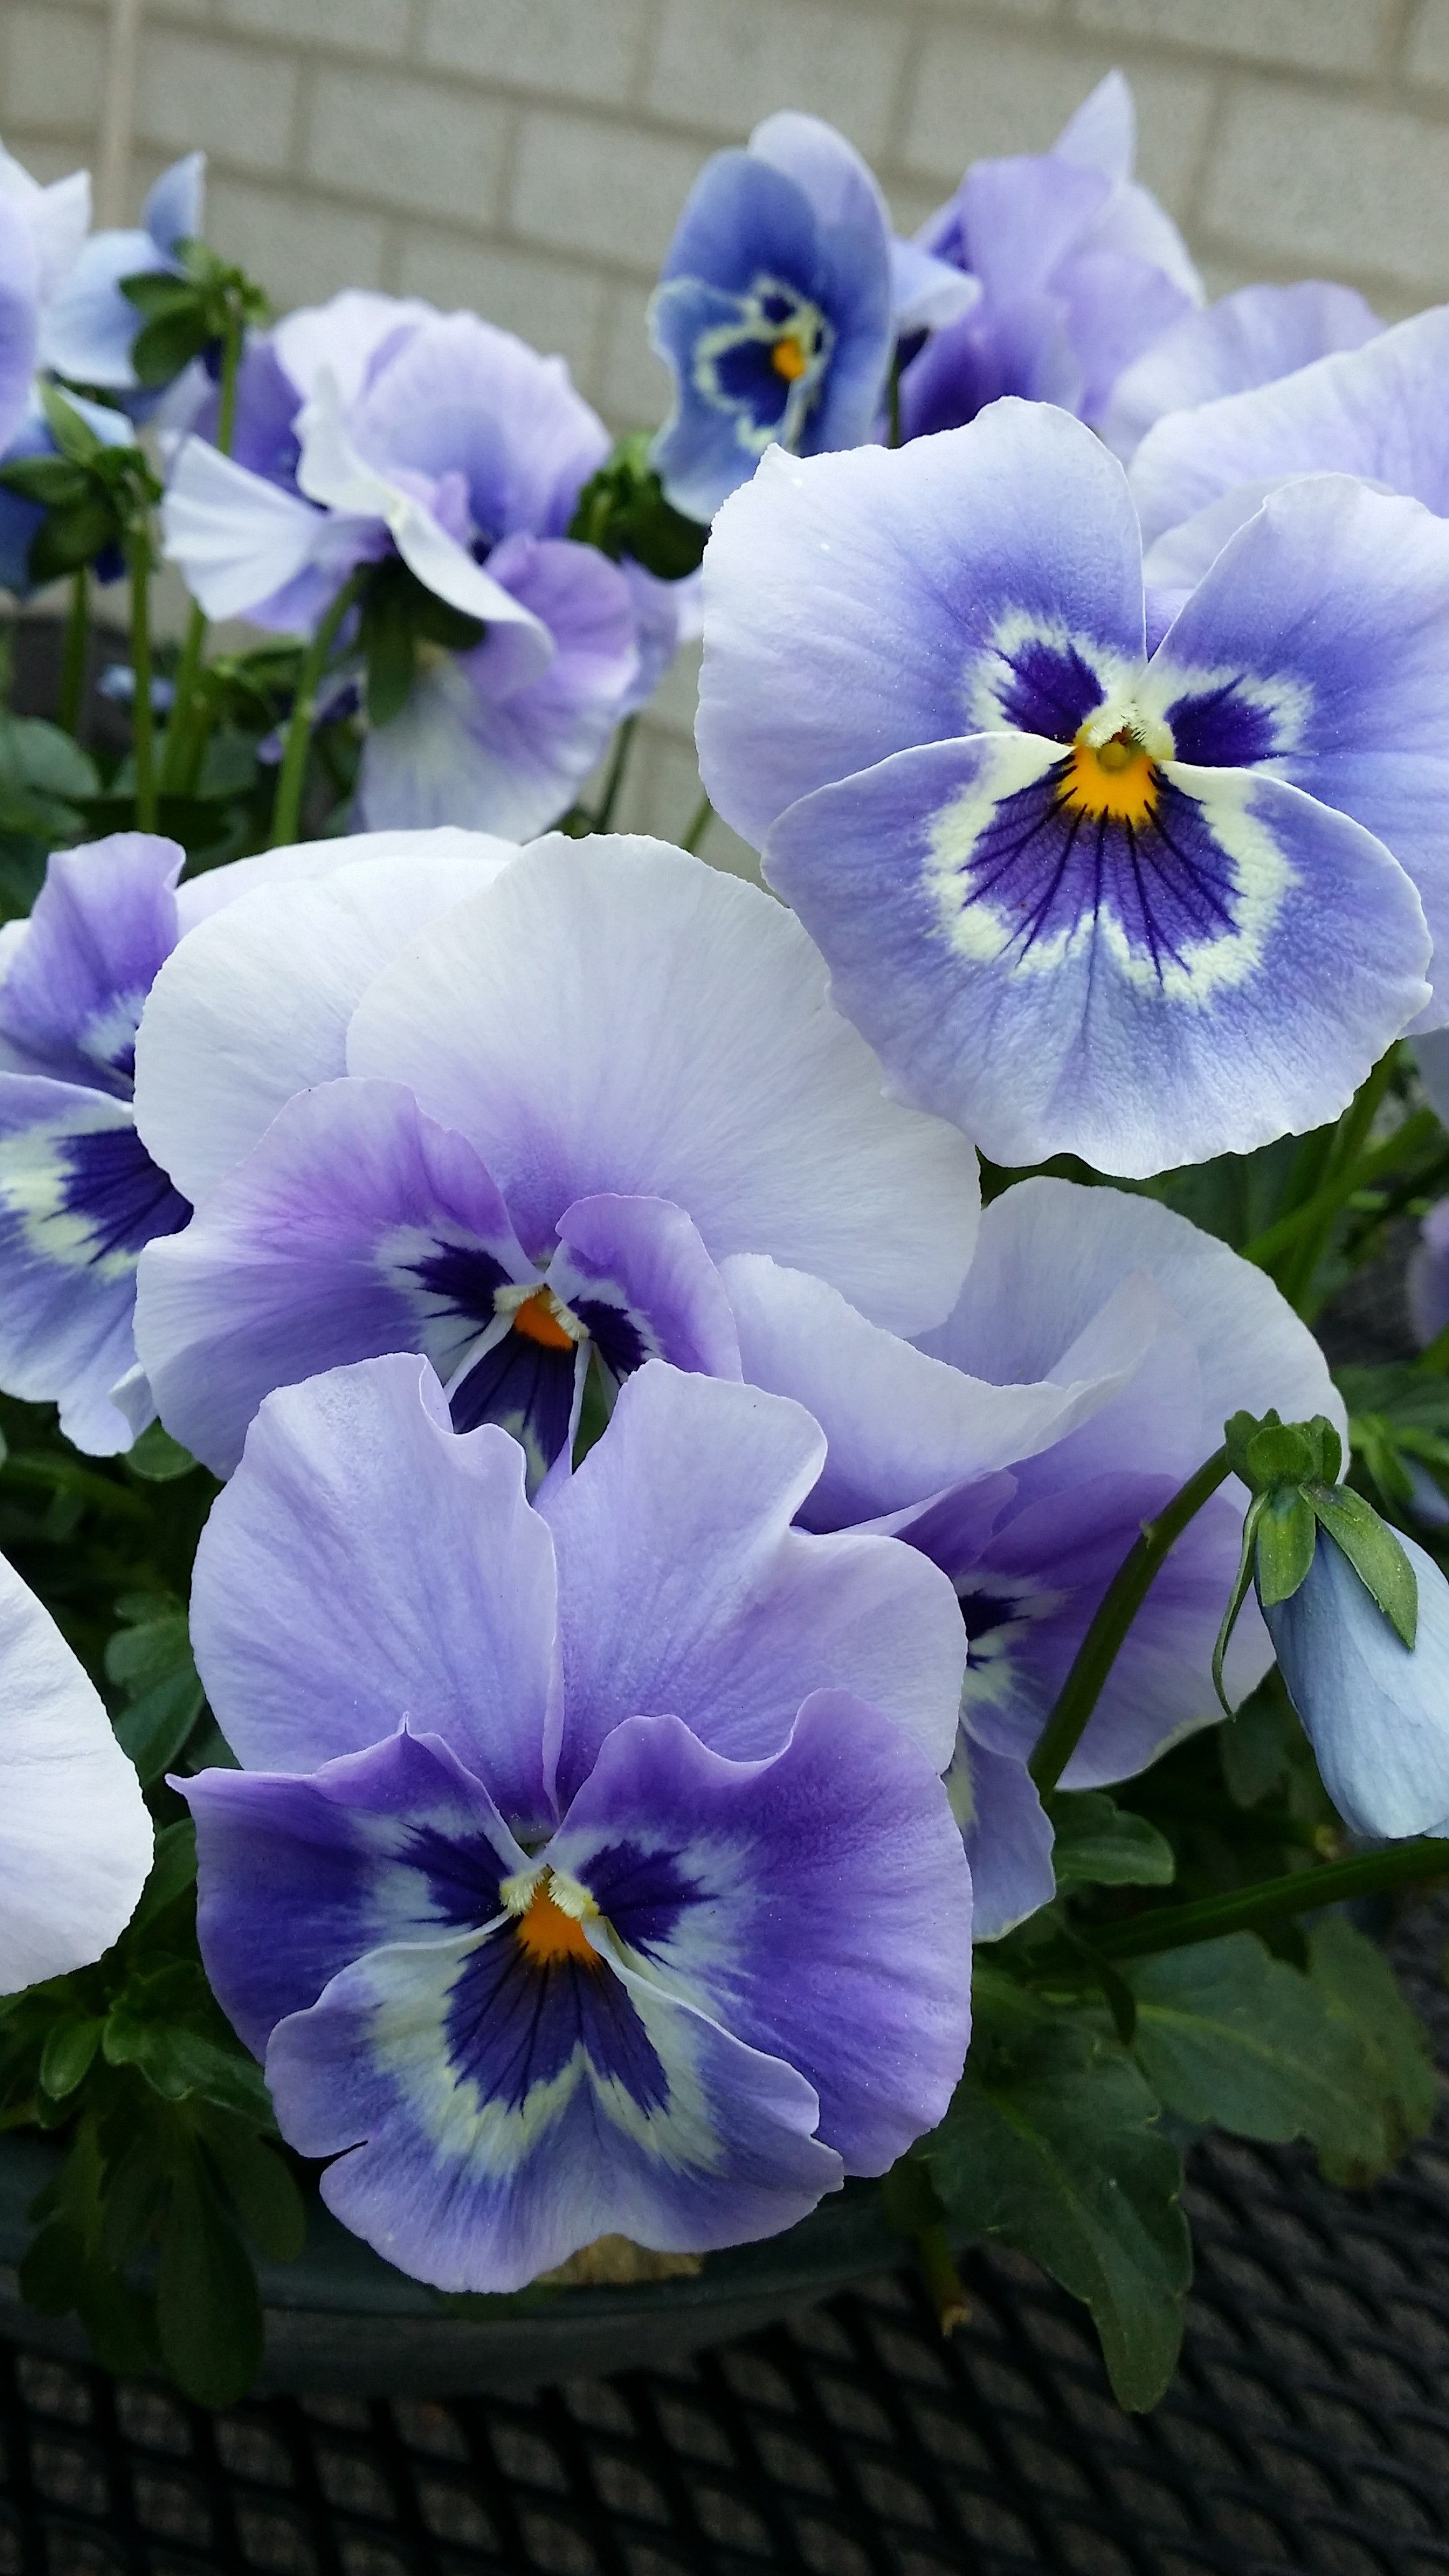 booskijkende viooltjes | beautiful flowers | Pinterest | Pansies ...